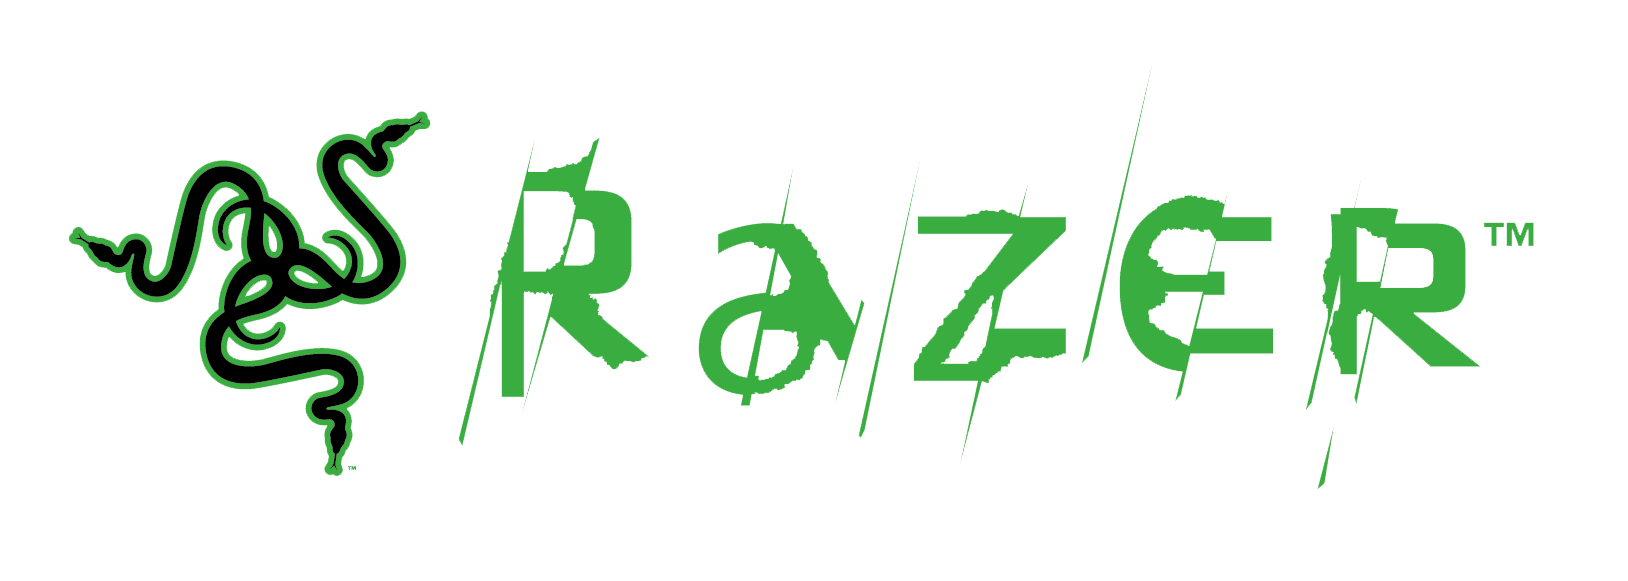 Razer Logo Clipart PNG Image